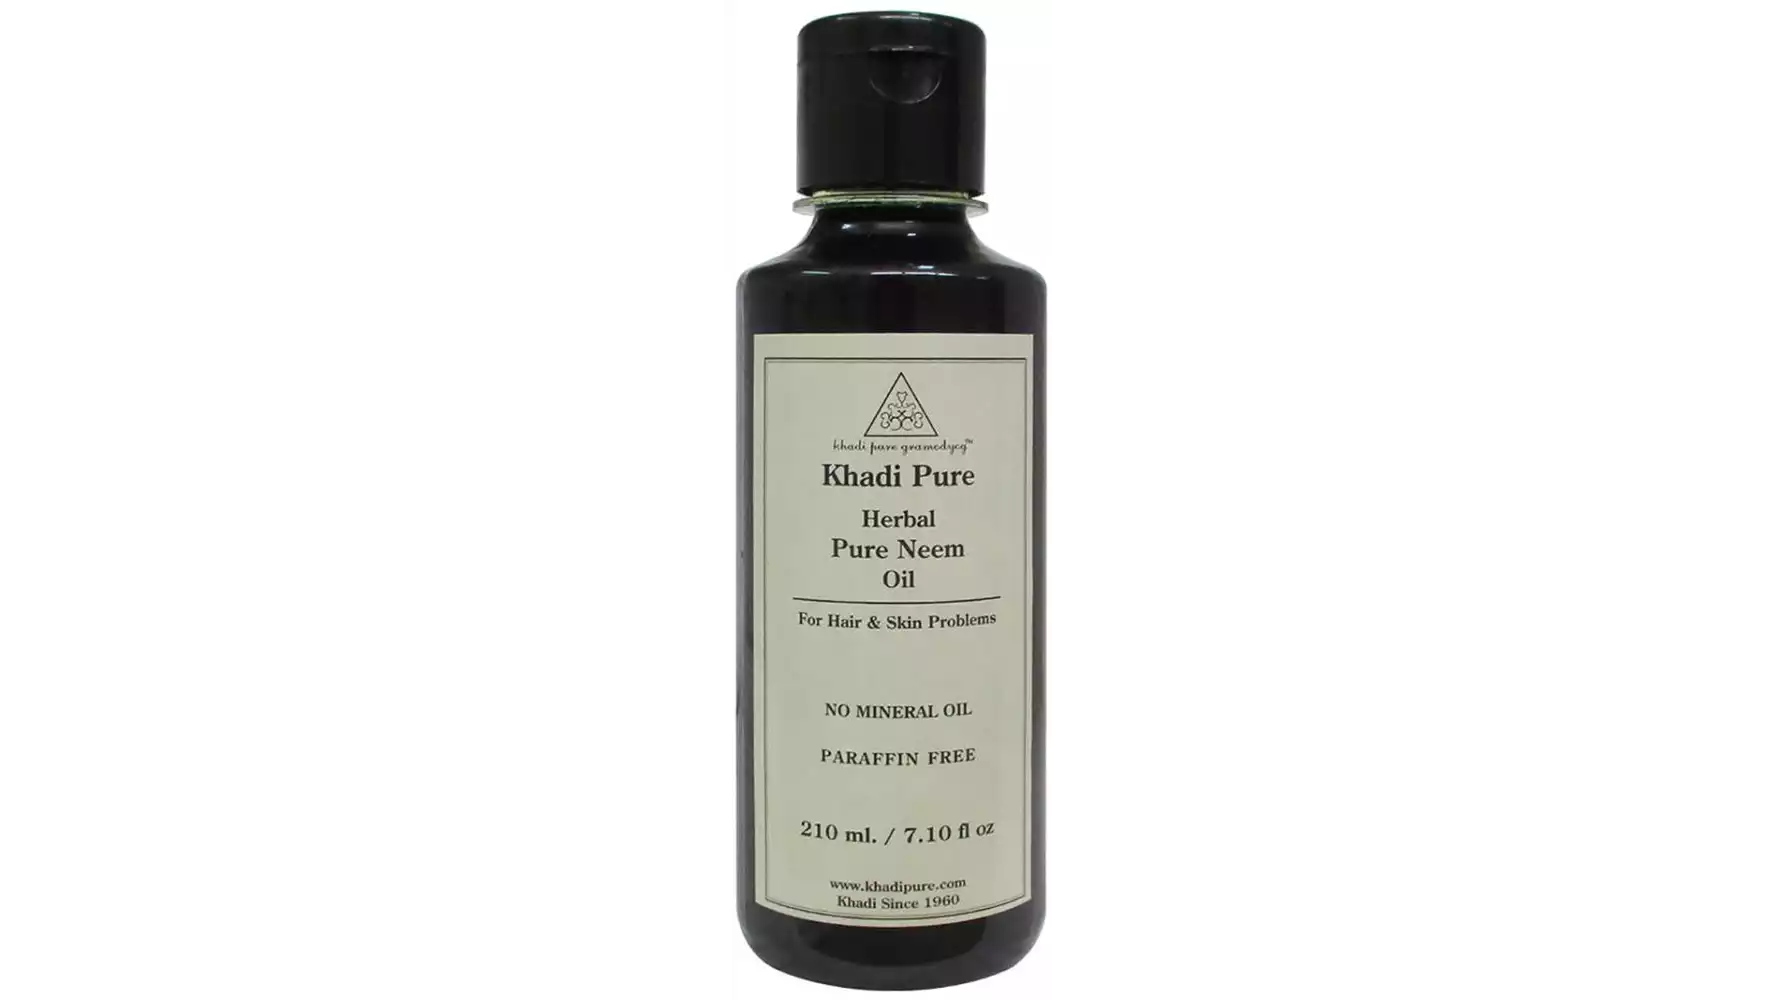 Khadi Pure Pure Neem Oil - Mineral Oil & Paraffin Free (210ml)